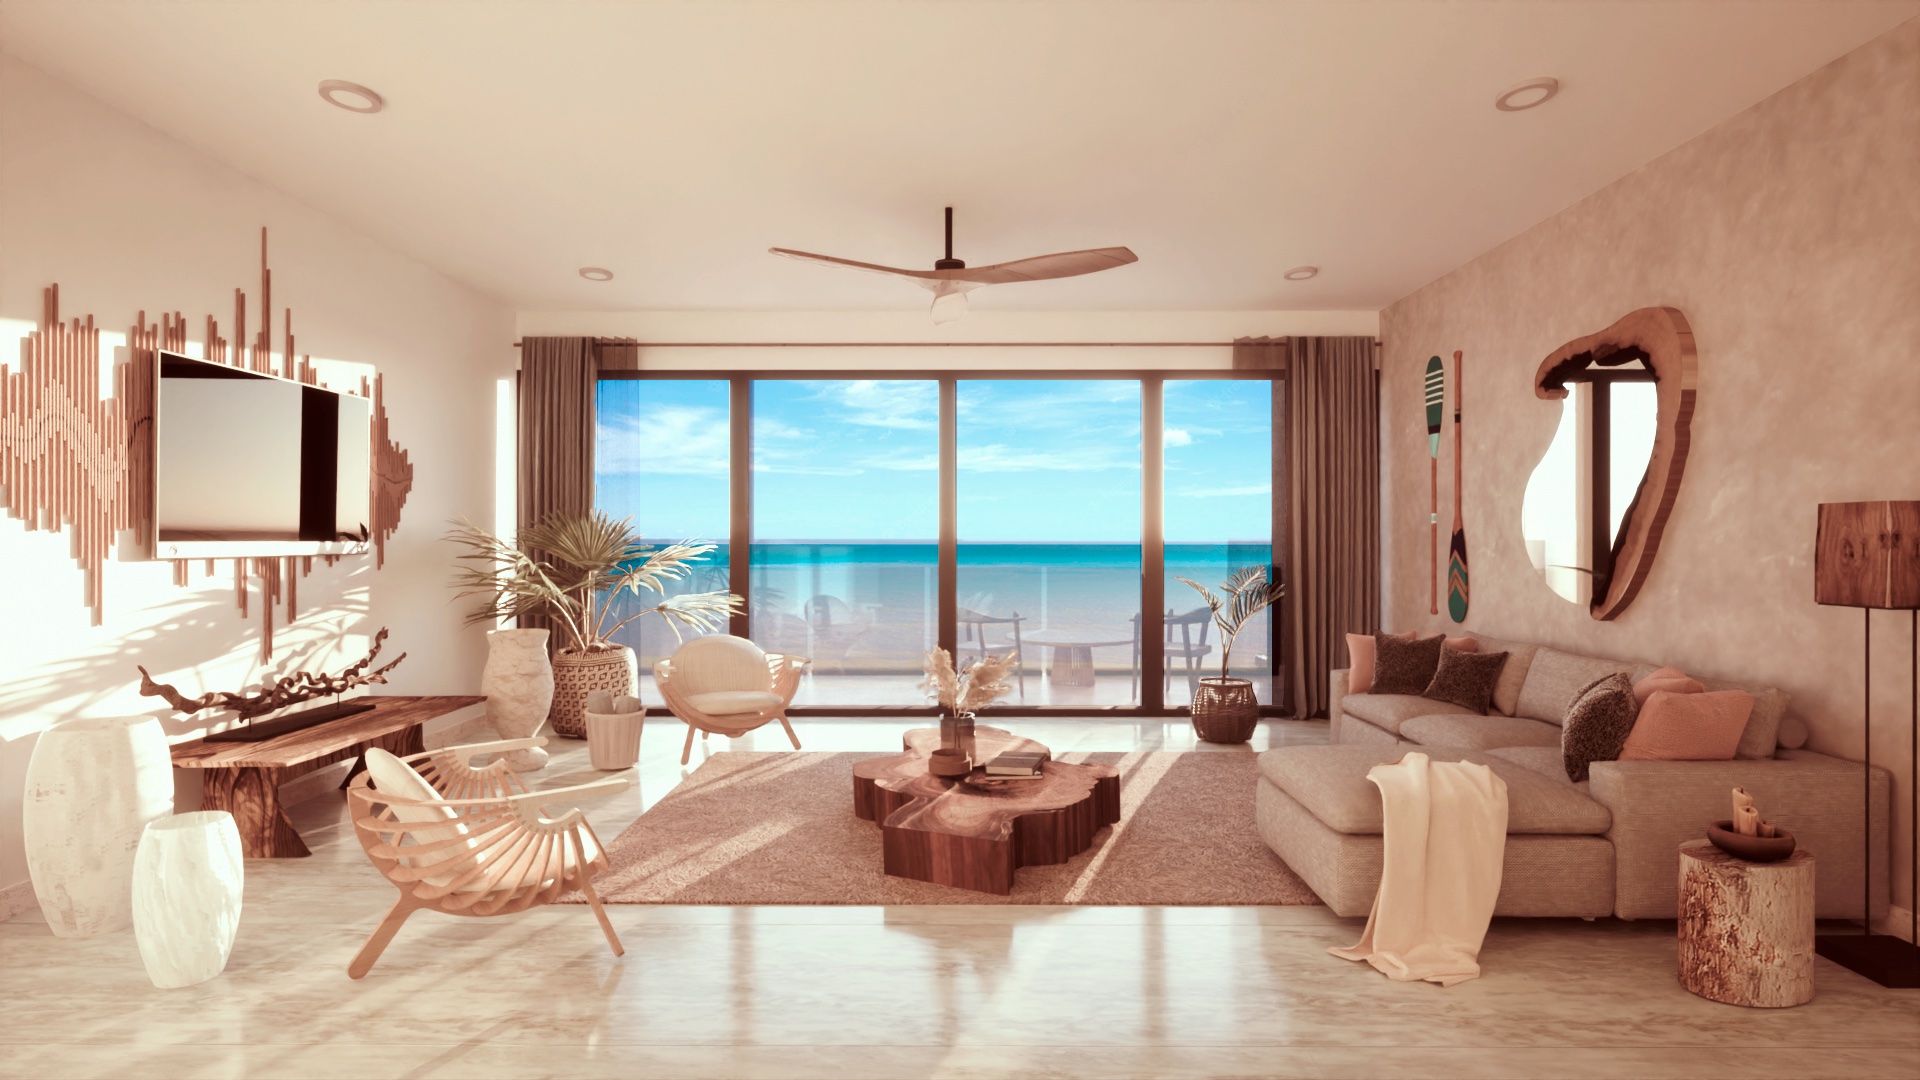 b luxury 4 bedroom condo with ocean view in tulum 041a living room